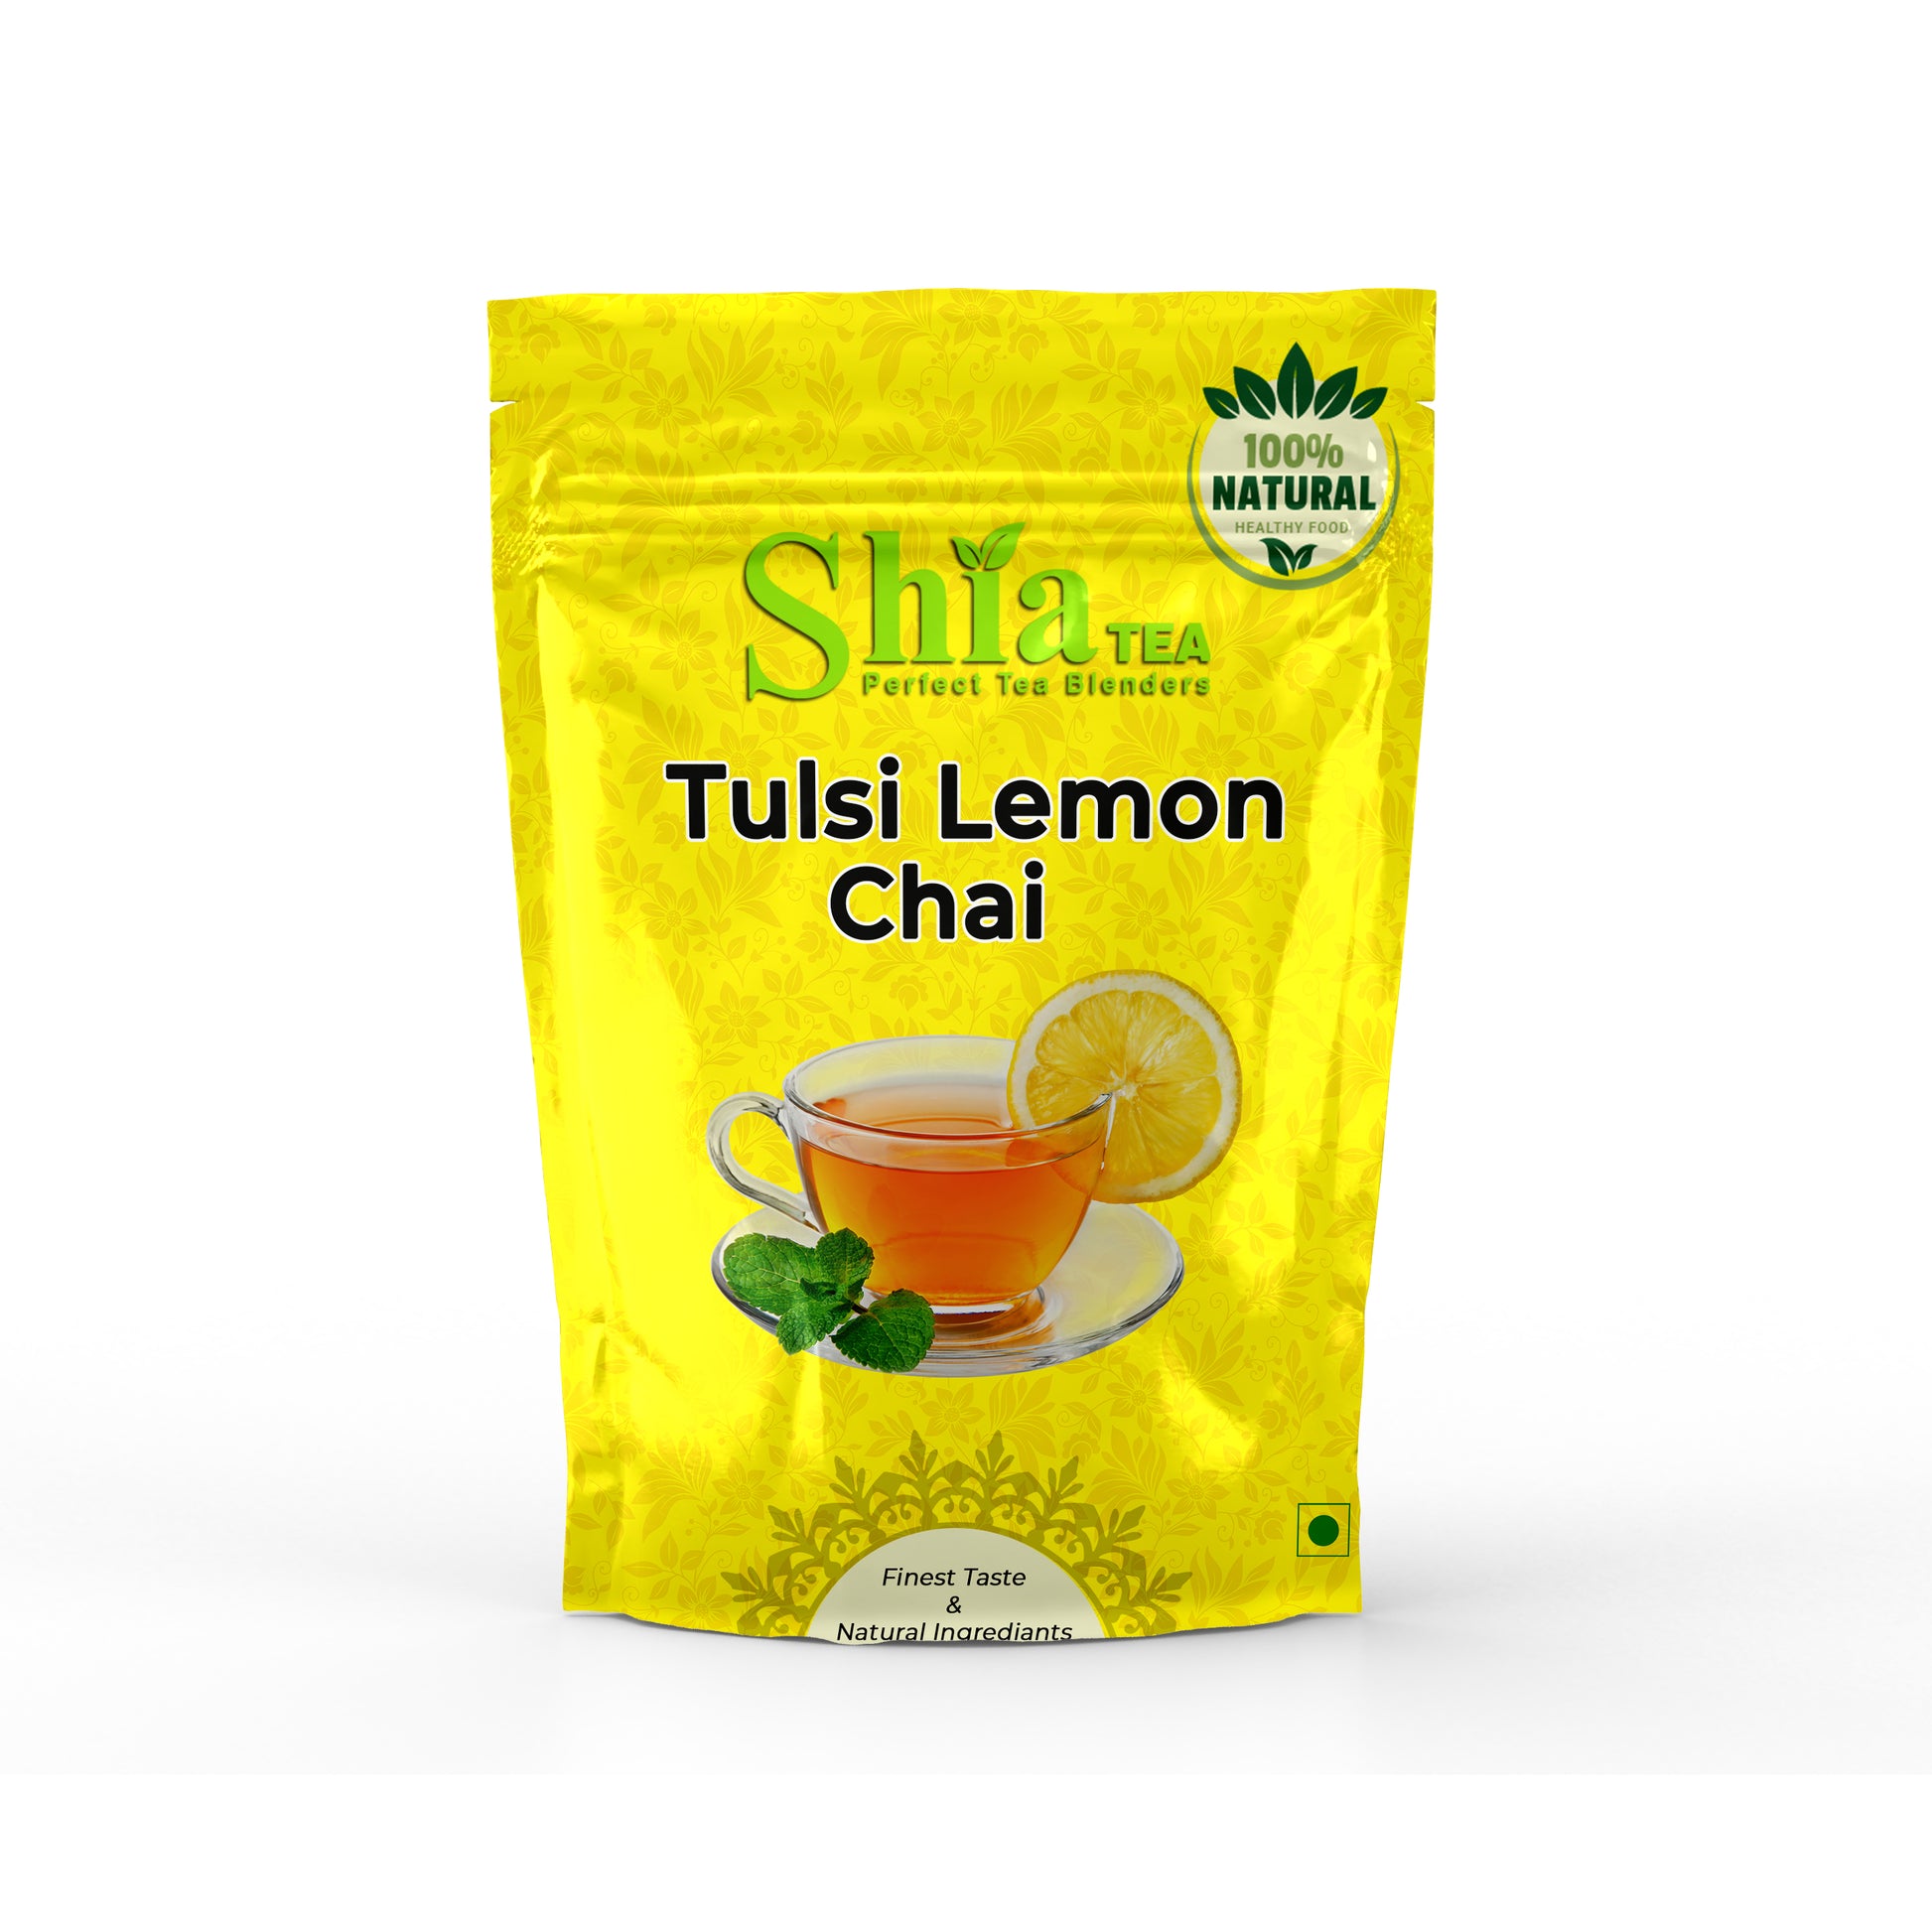 Tulsi Lemon Chai